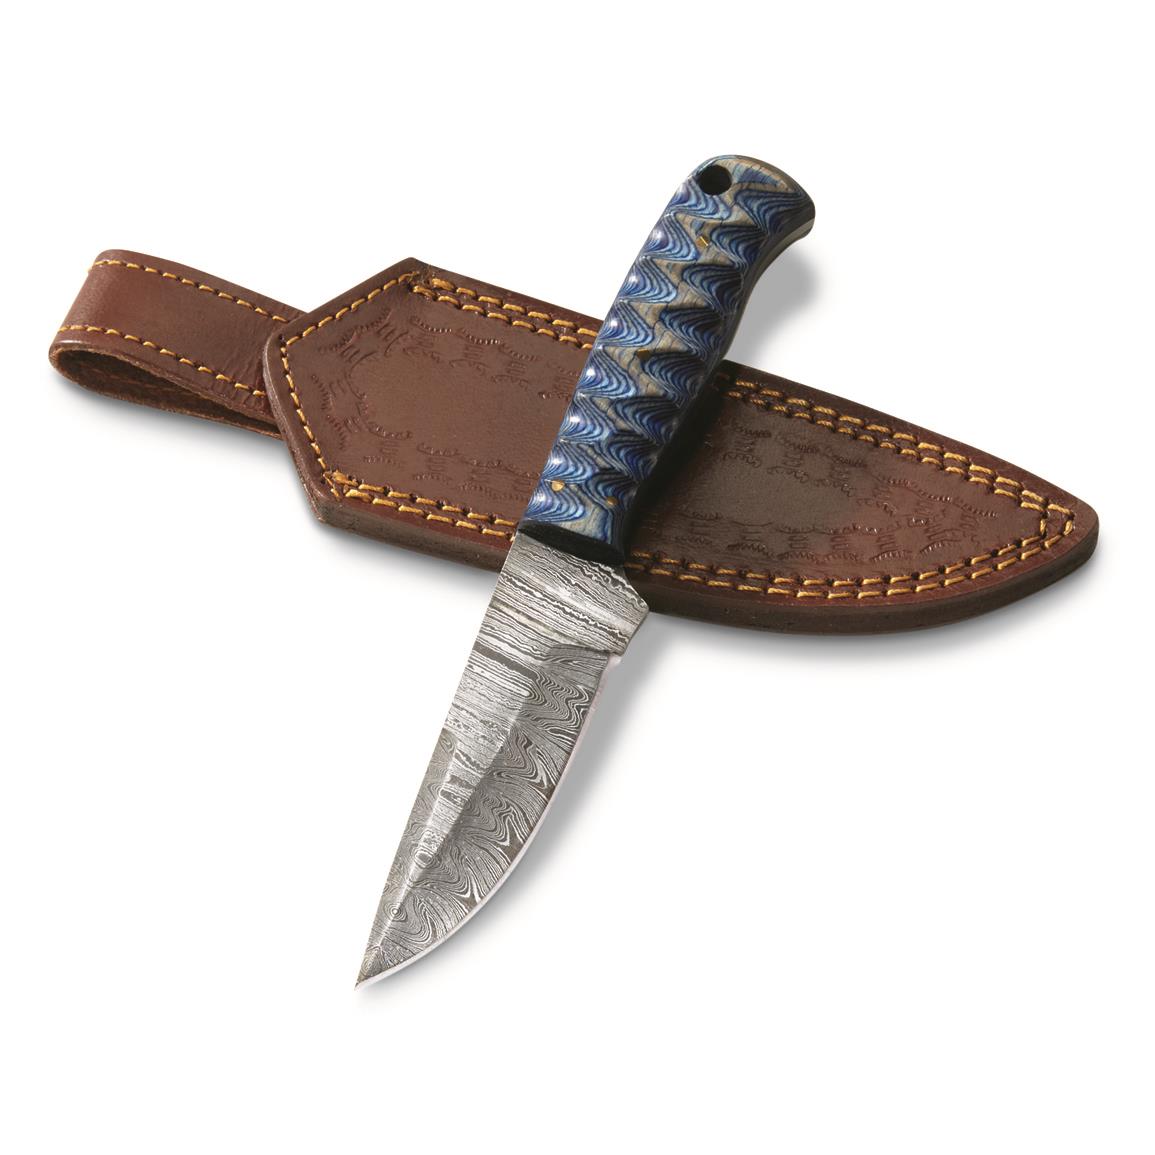 SZCO Exotic Hunter Twisted Wood Damascus Fixed Blade Knife, Blue